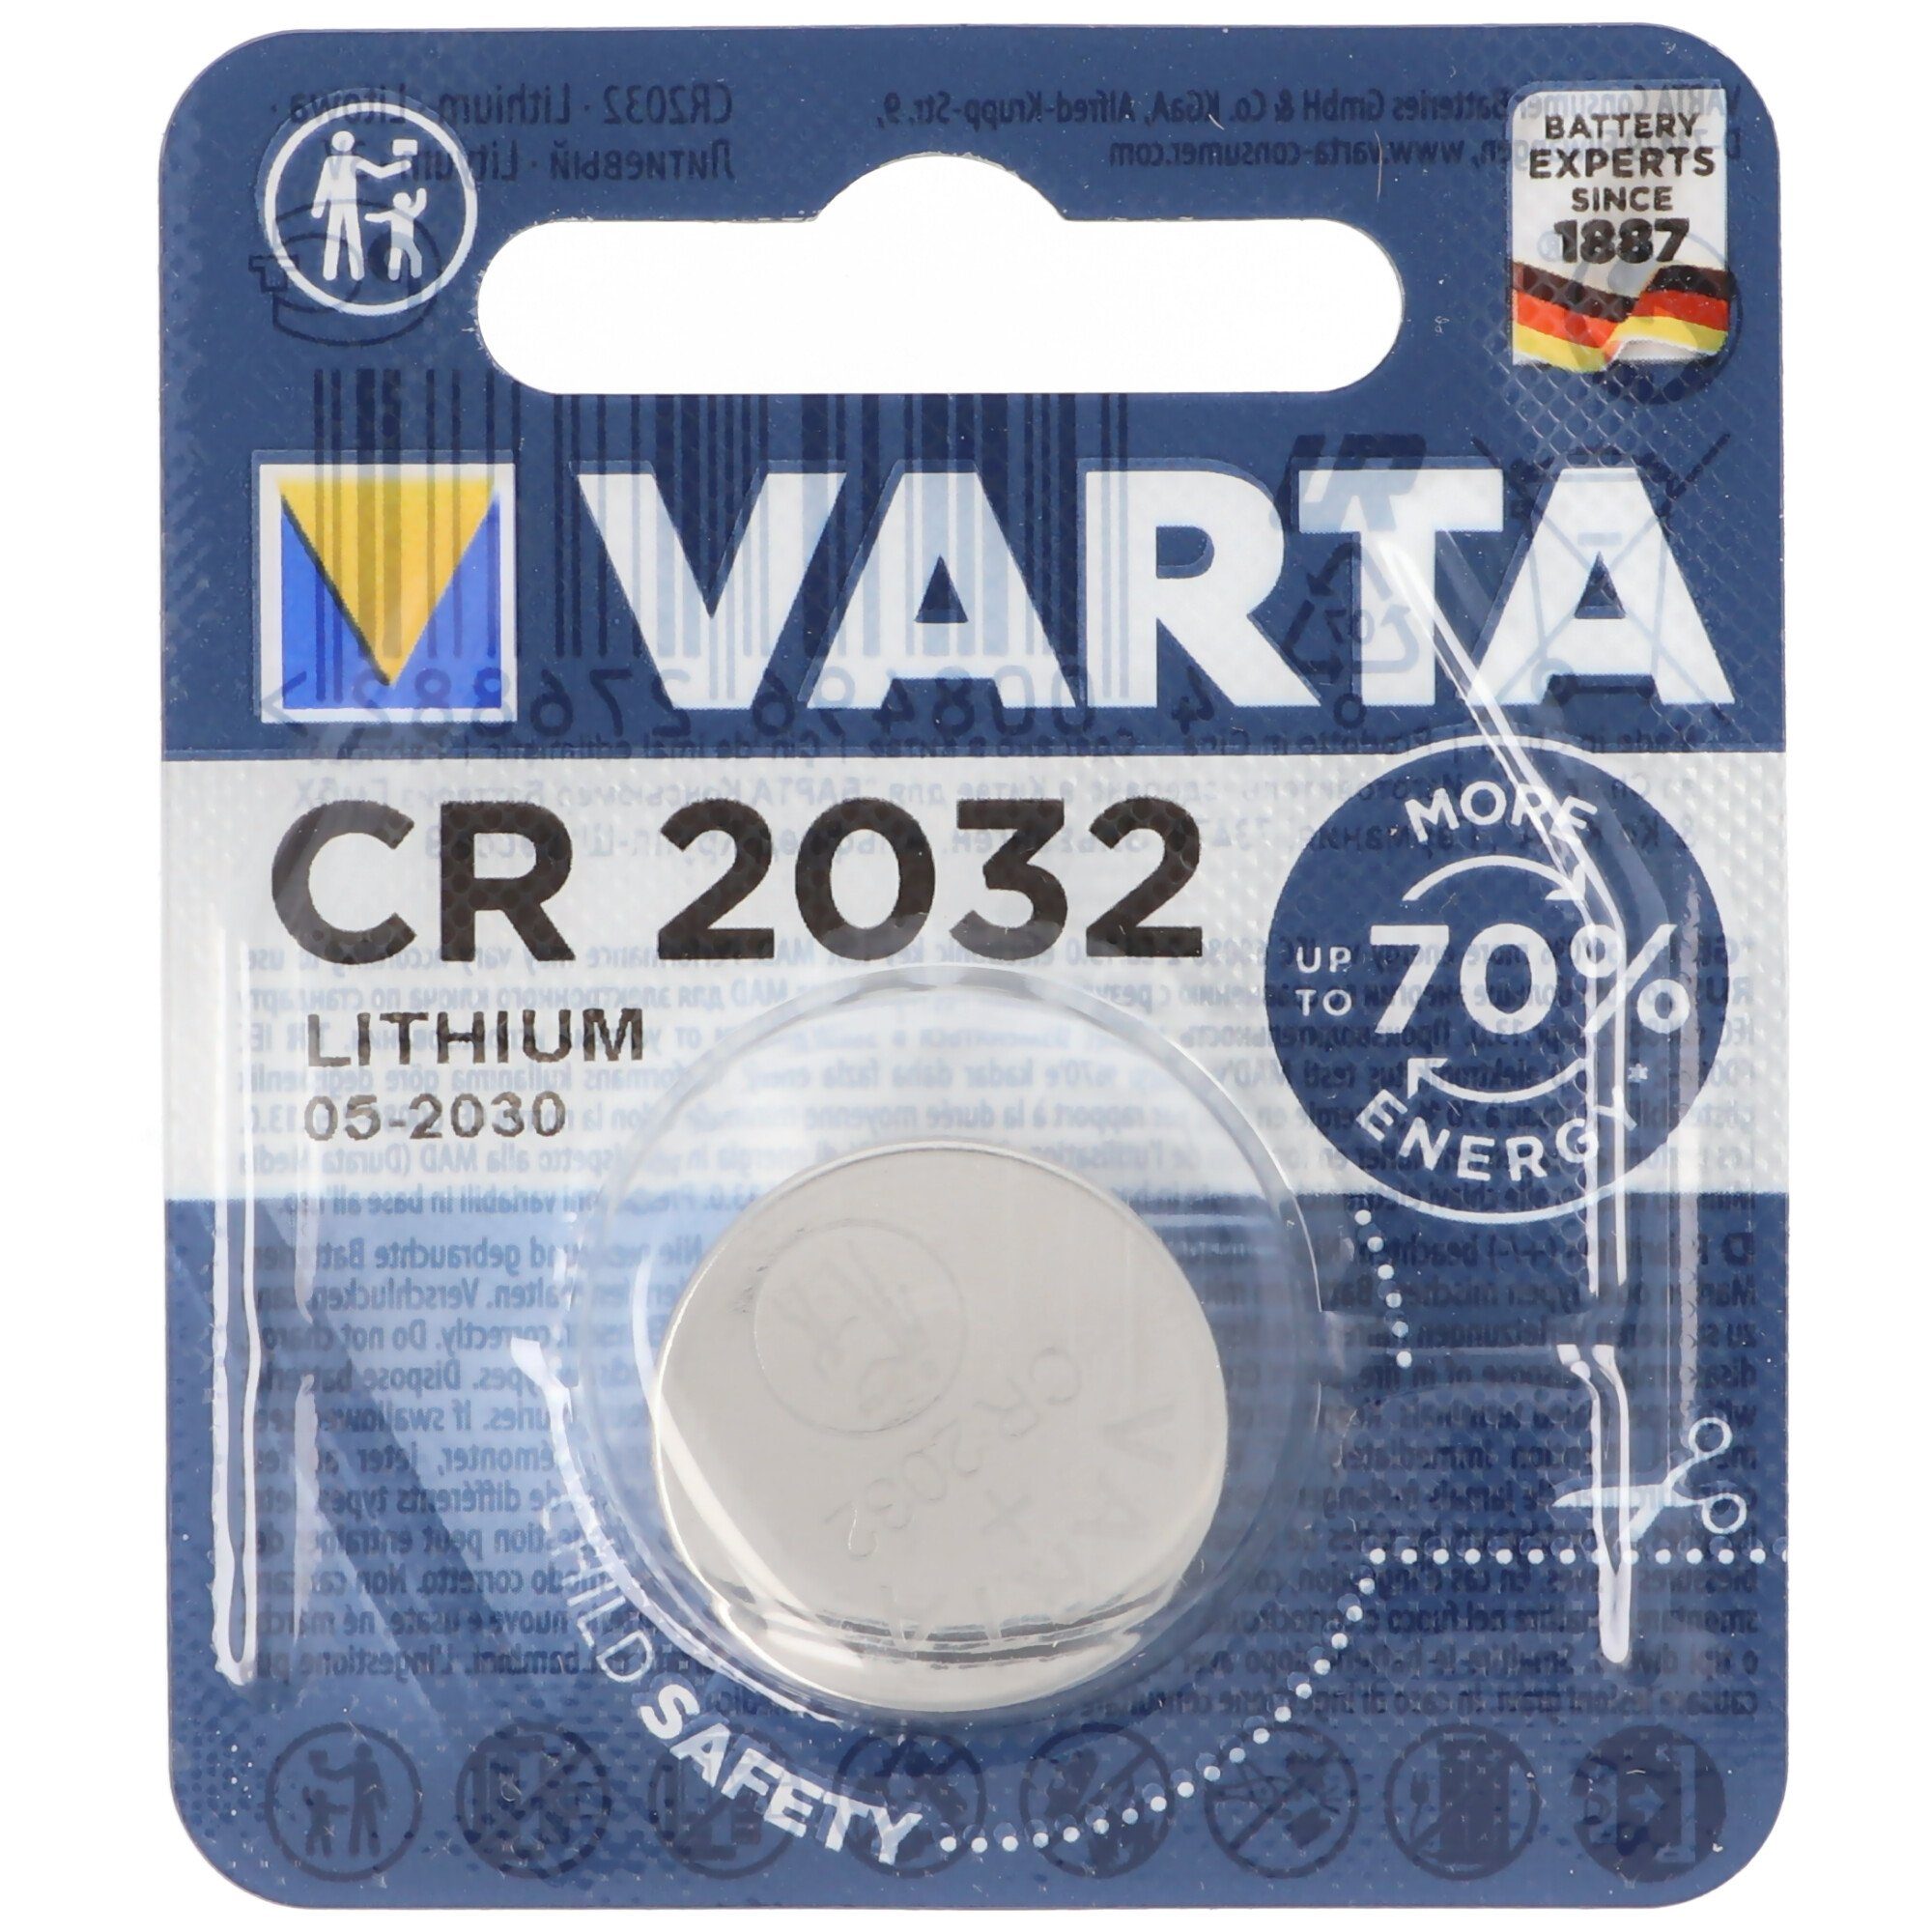 billig VARTA Varta CR2032 CR2032 Lithium V) 20x3,2mm (3,0 Batterie, IEC Batterie Abmessungen